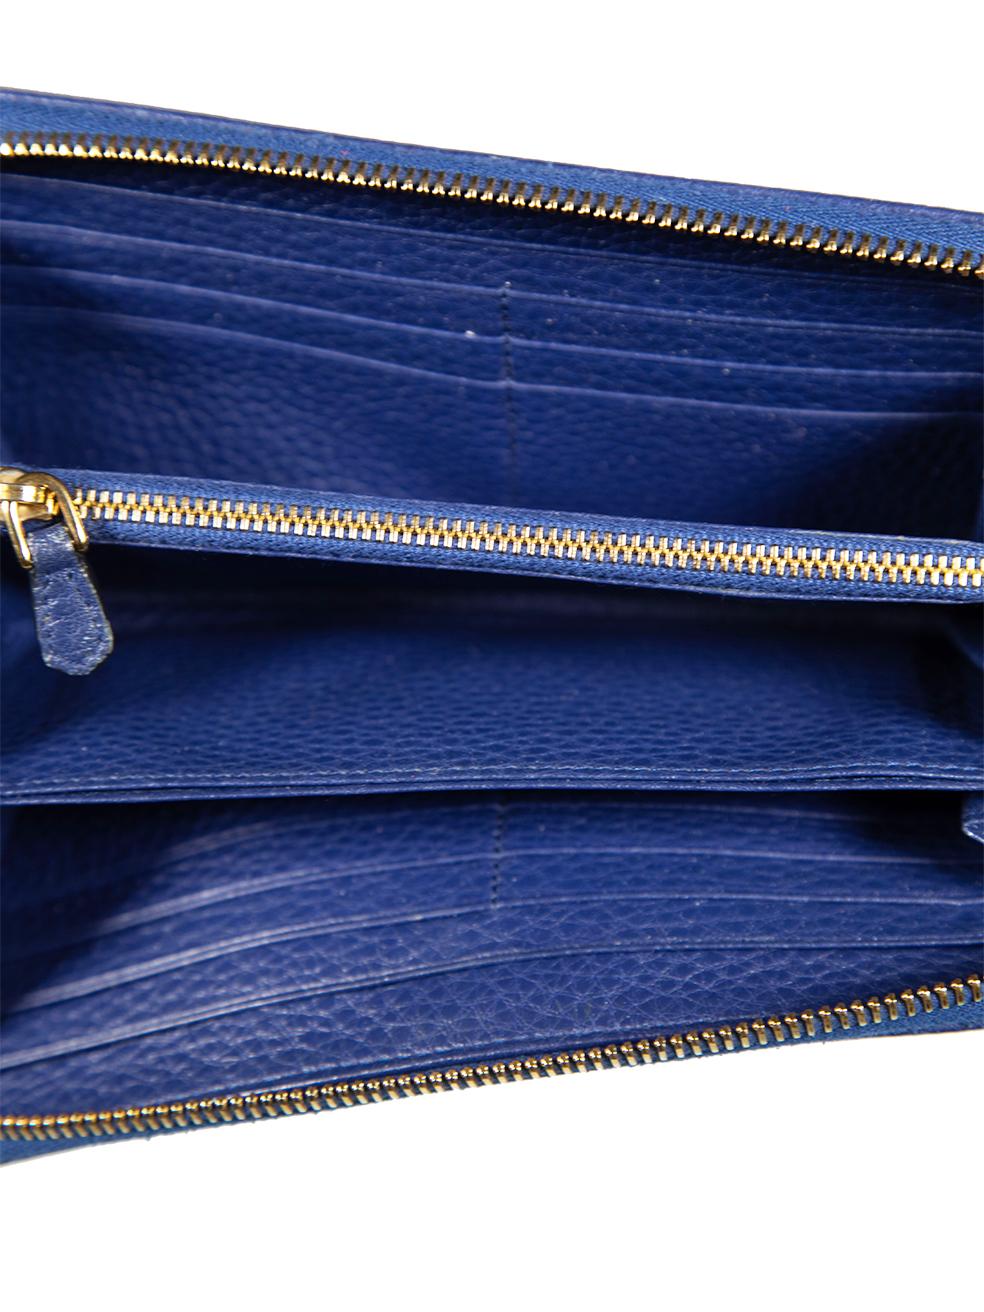 Prada Blue Leather Zip-Around Wallet For Sale 1